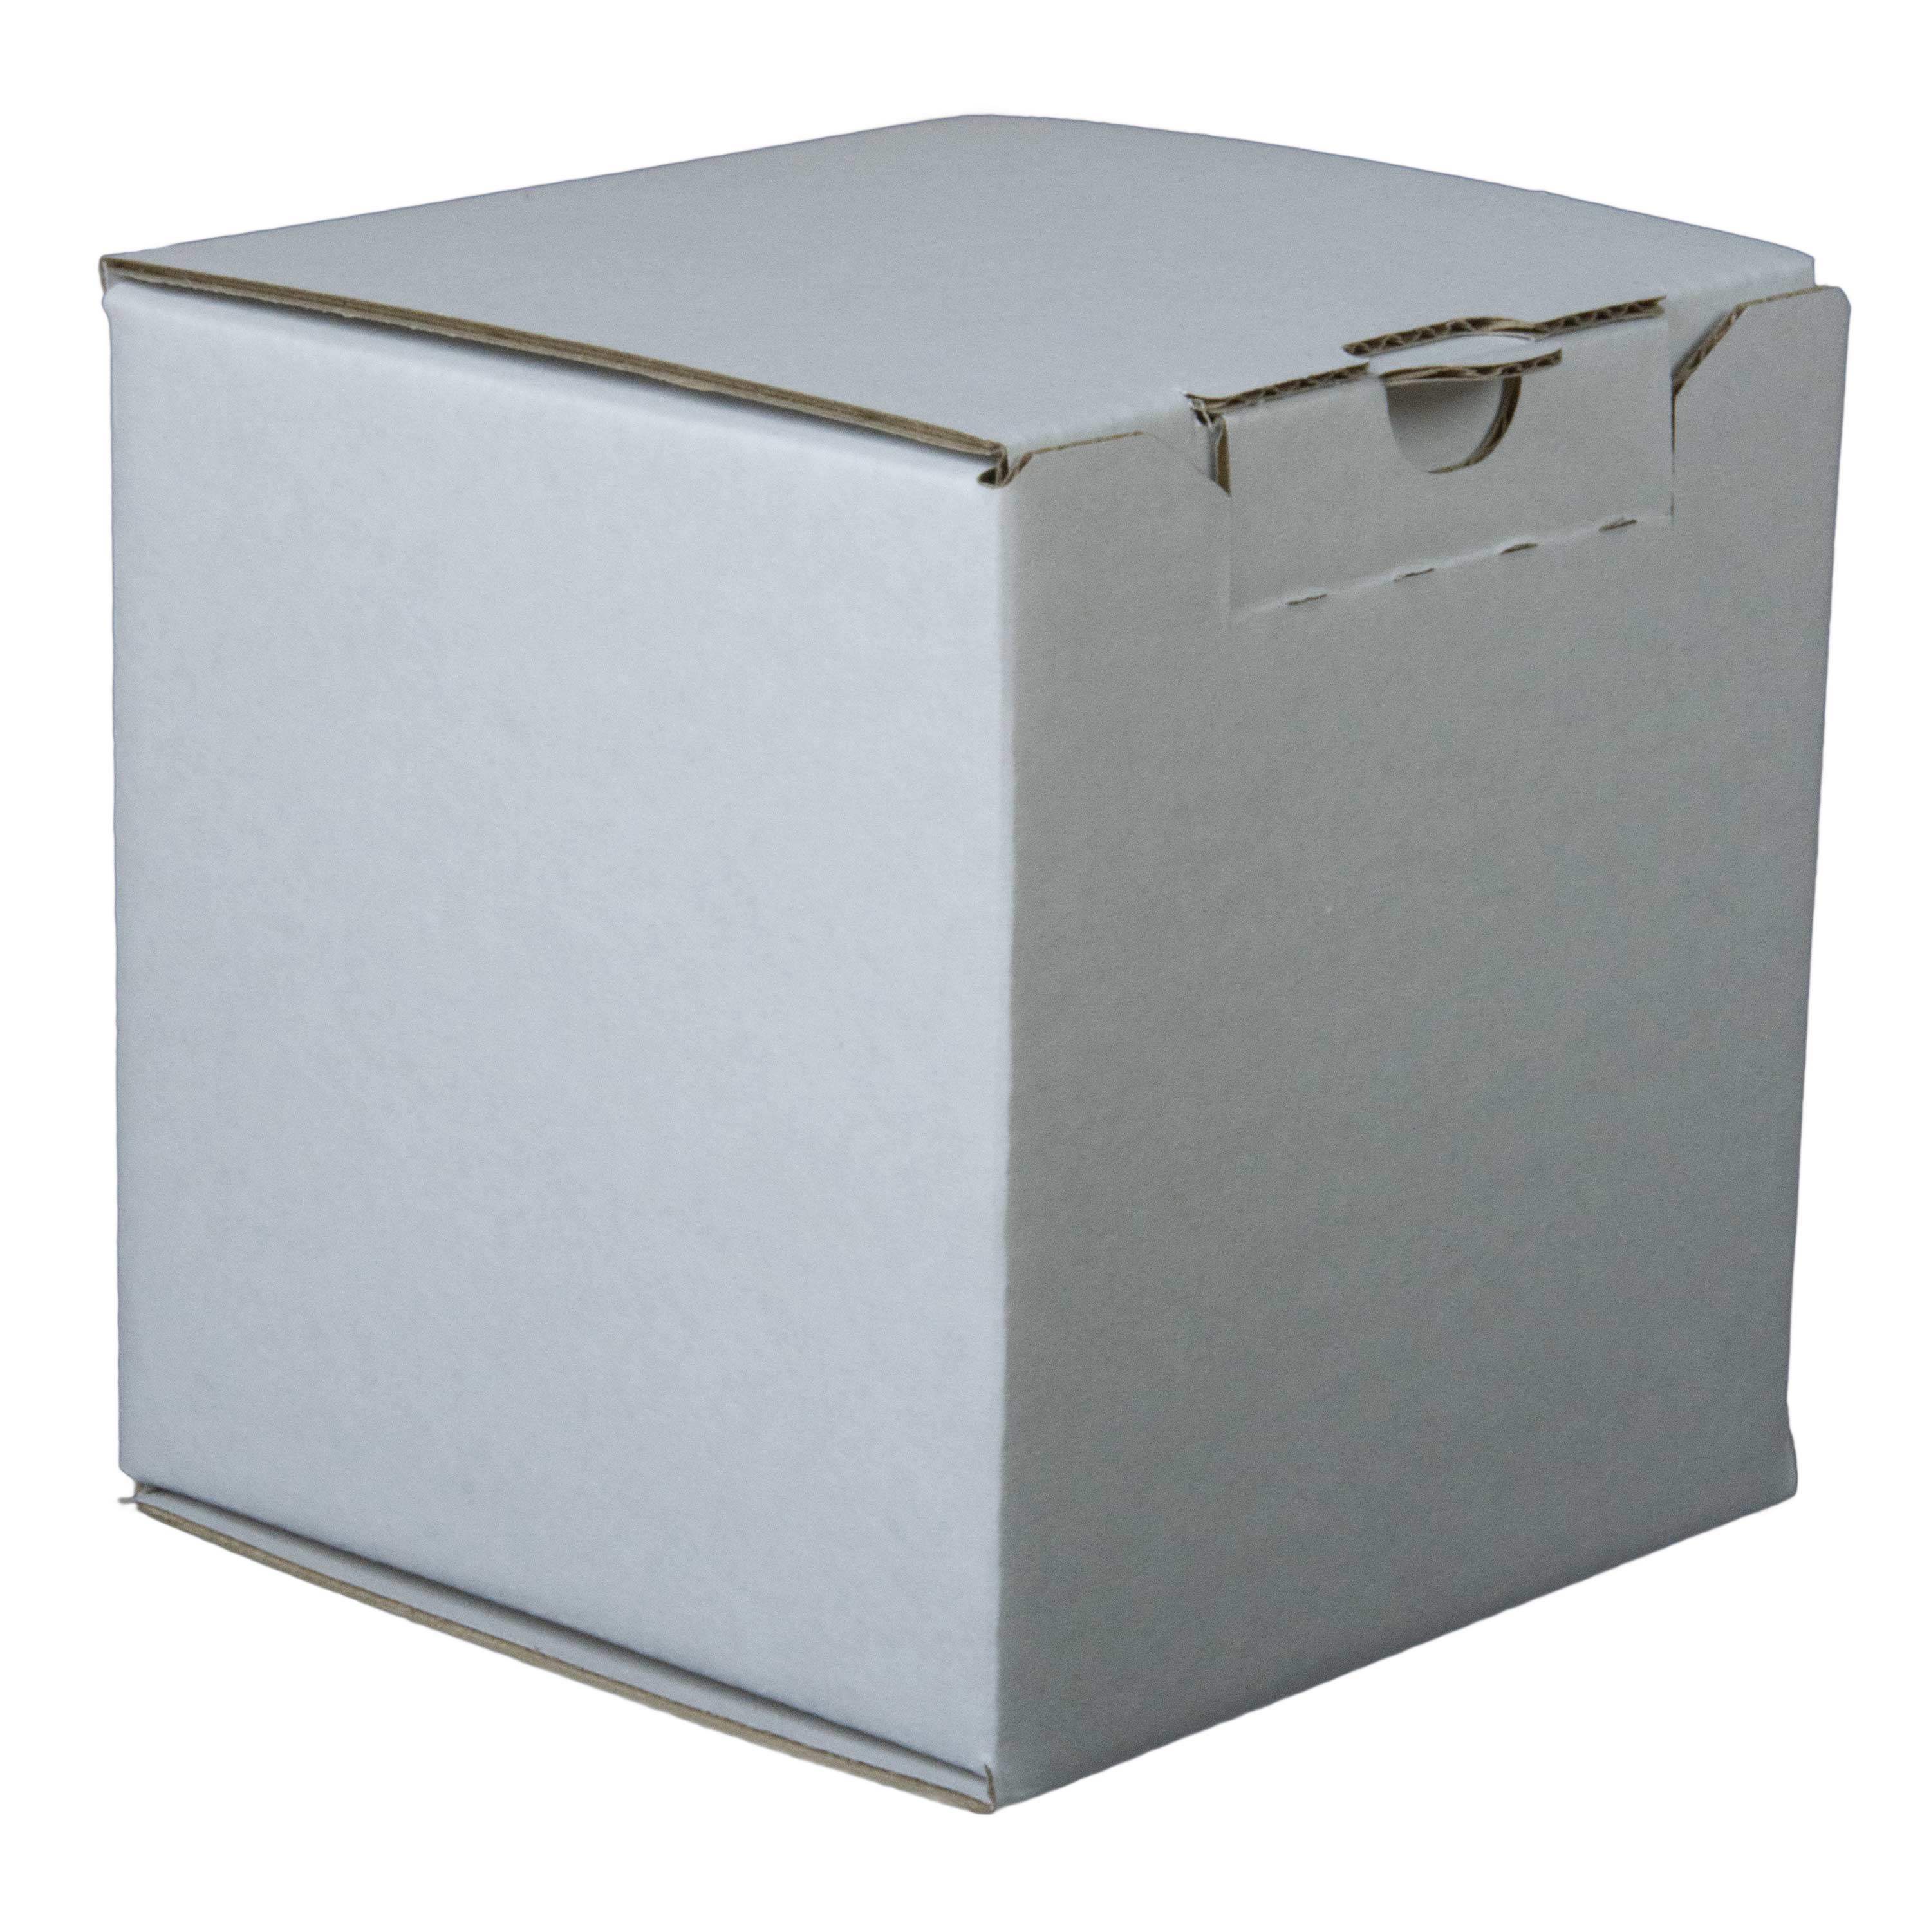 Filter pad carton packaging